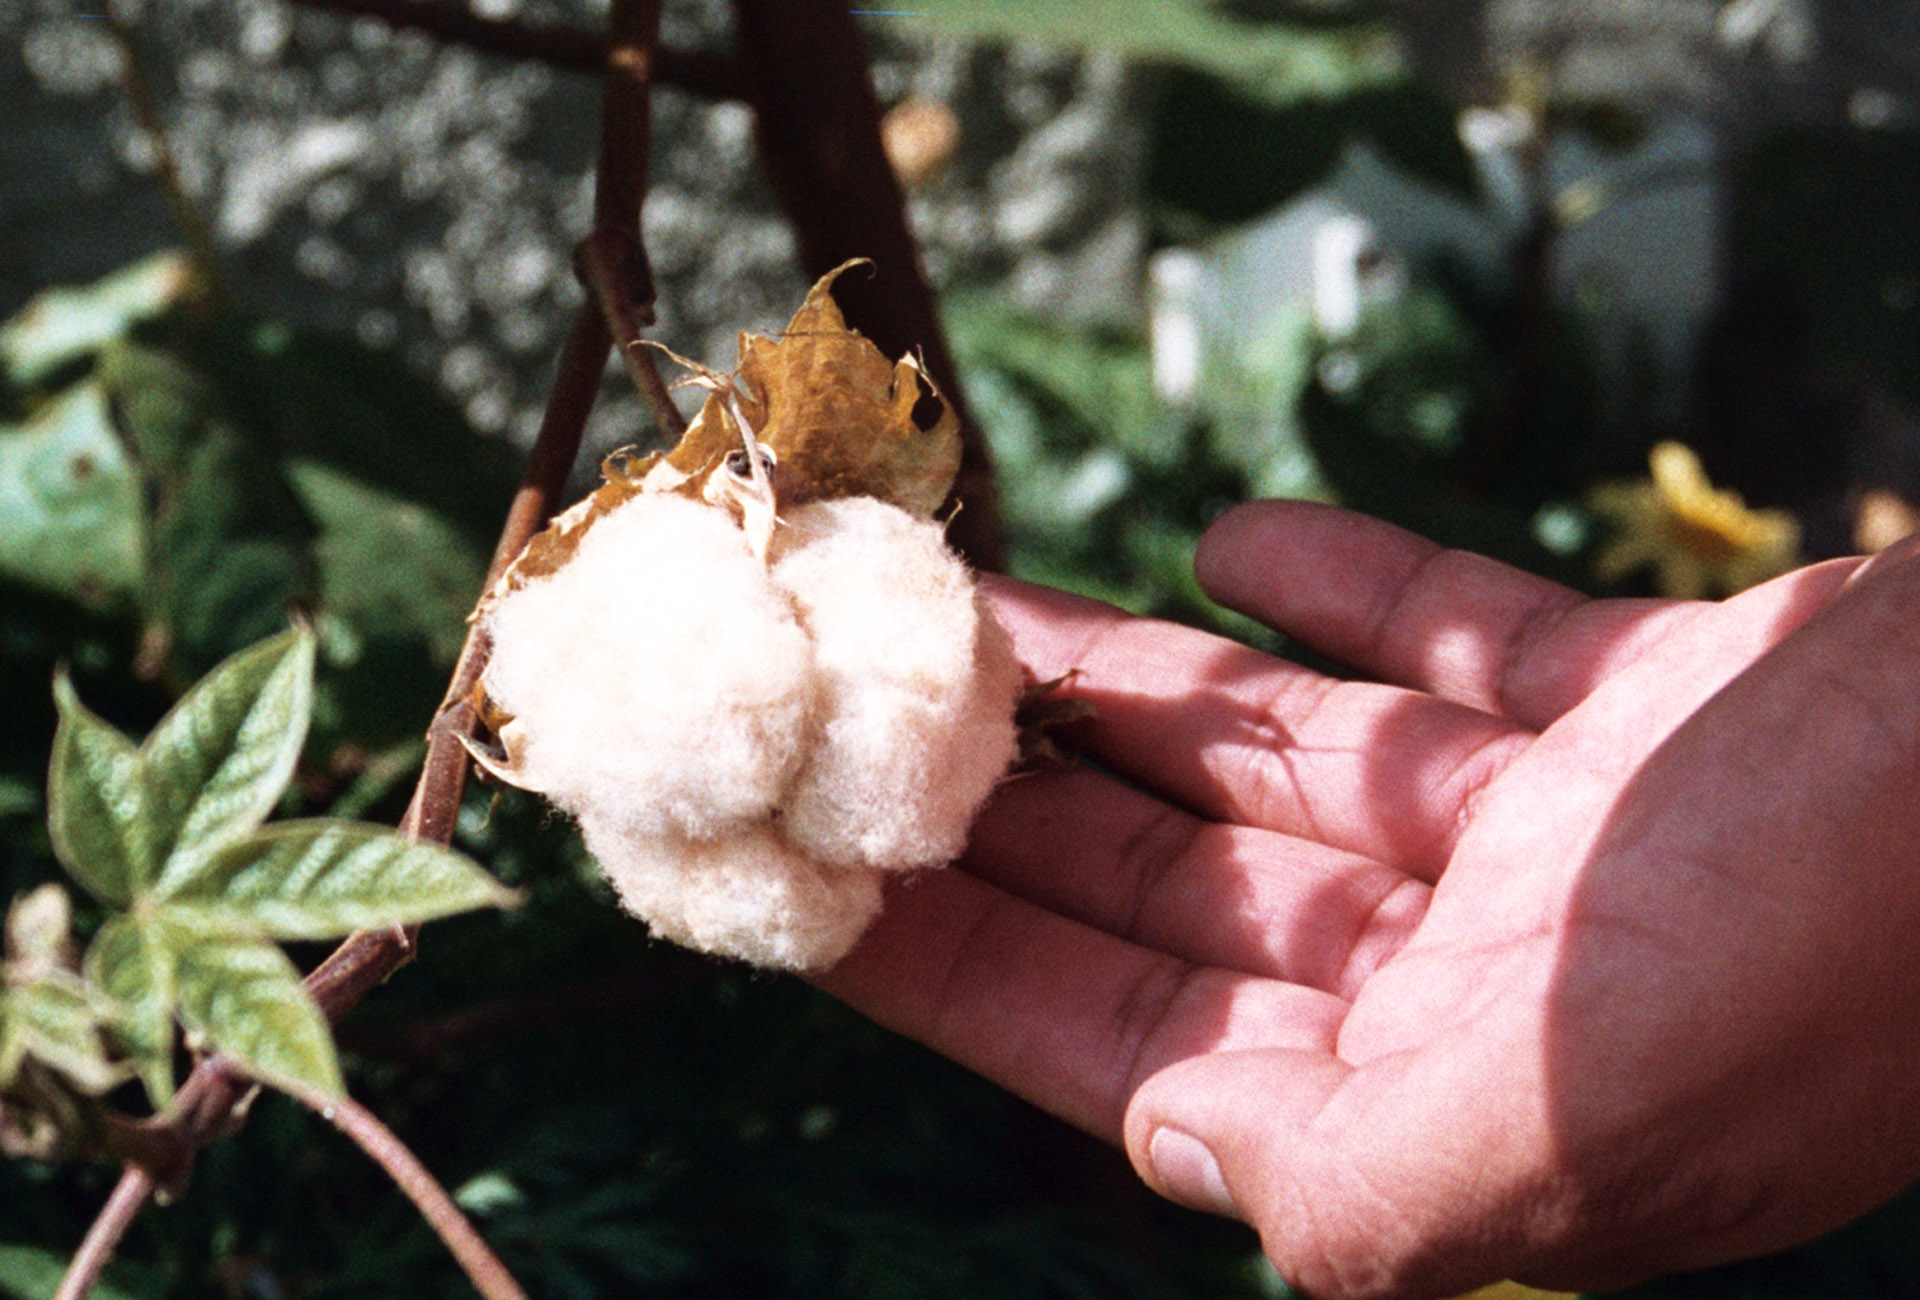 IMK cotton plant